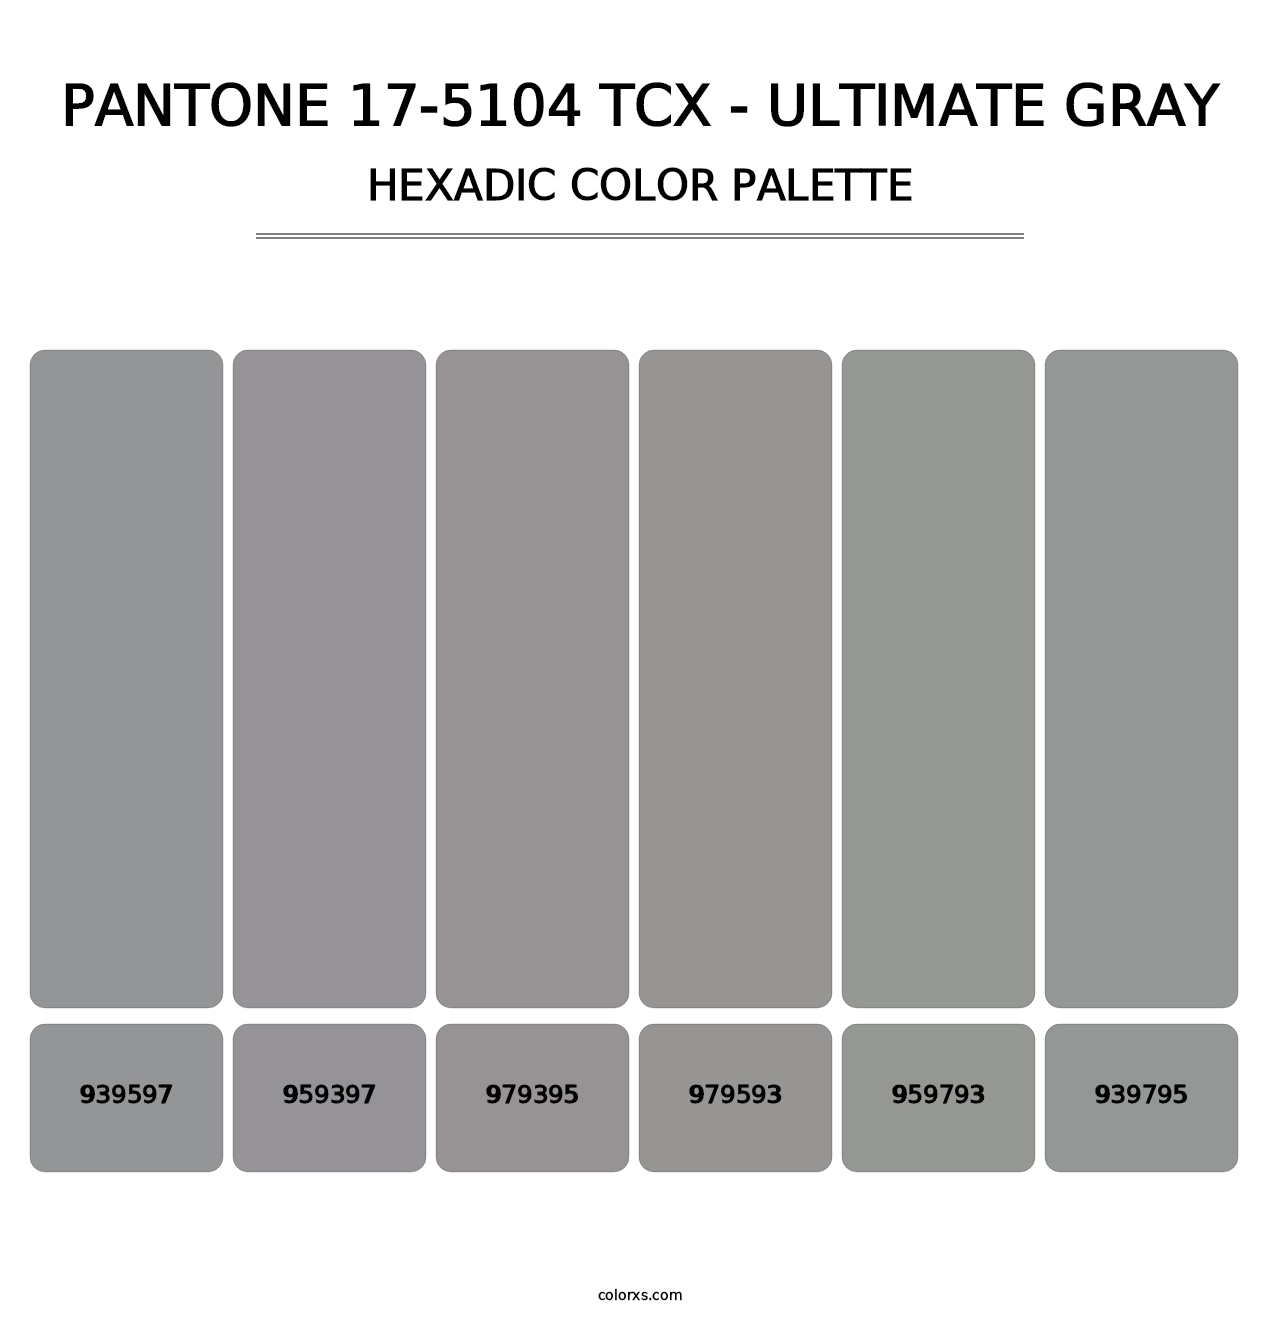 PANTONE 17-5104 TCX - Ultimate Gray - Hexadic Color Palette